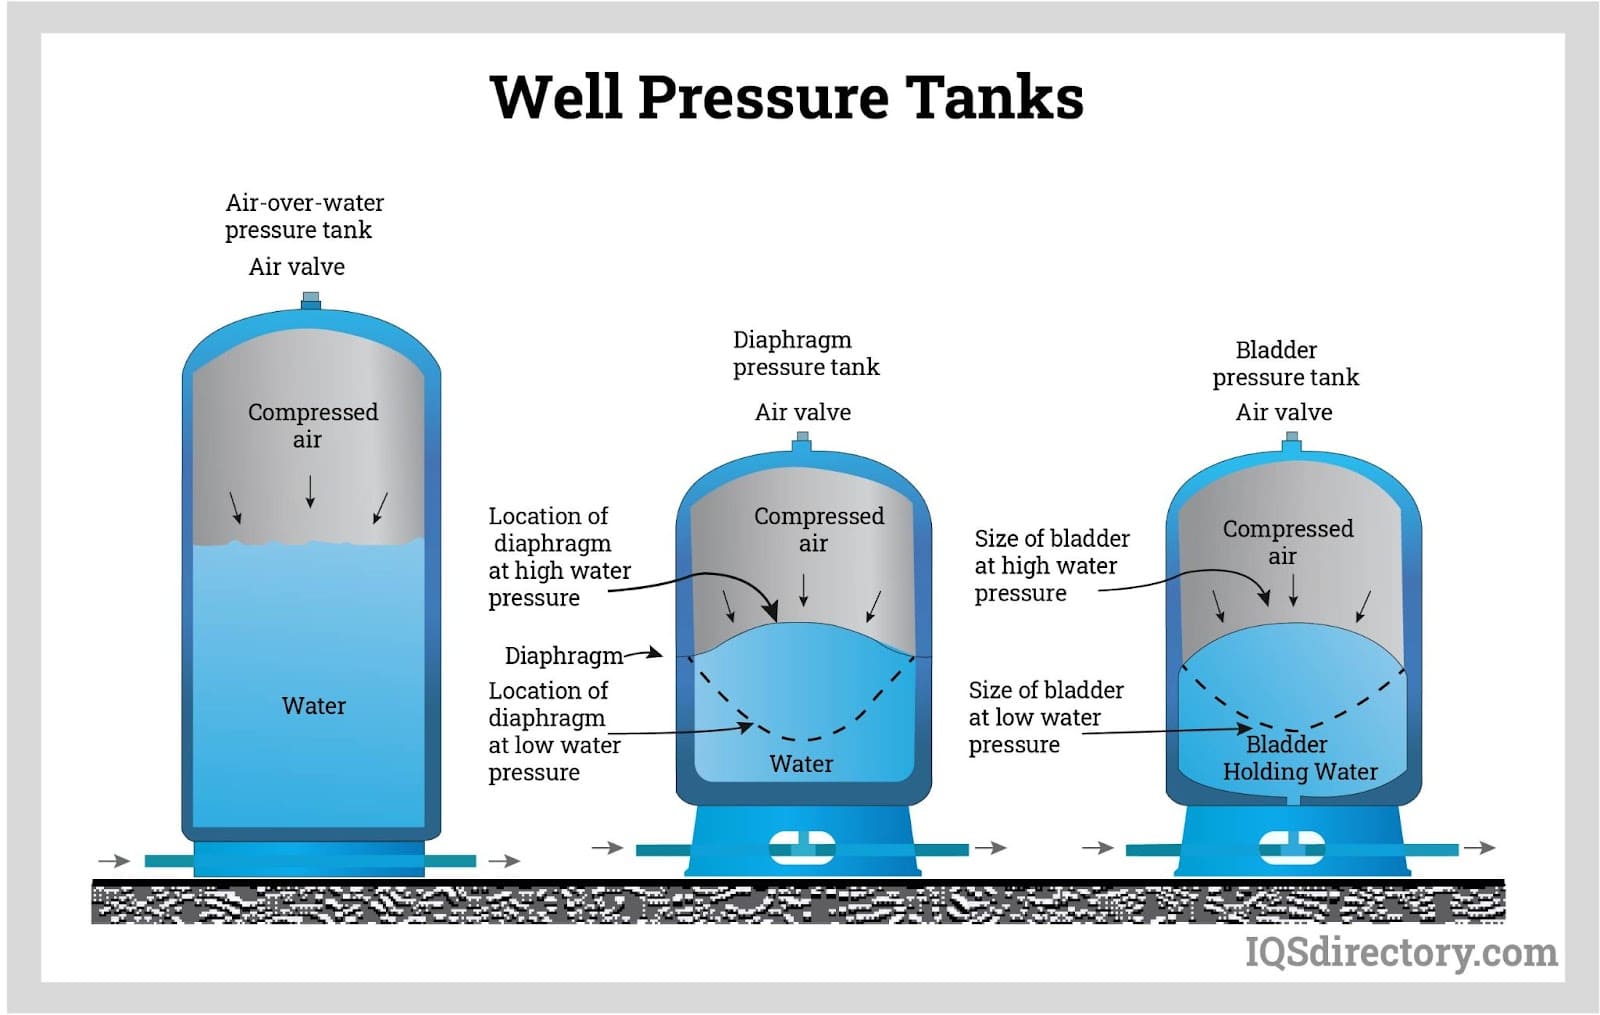 Well Pressure Tanks